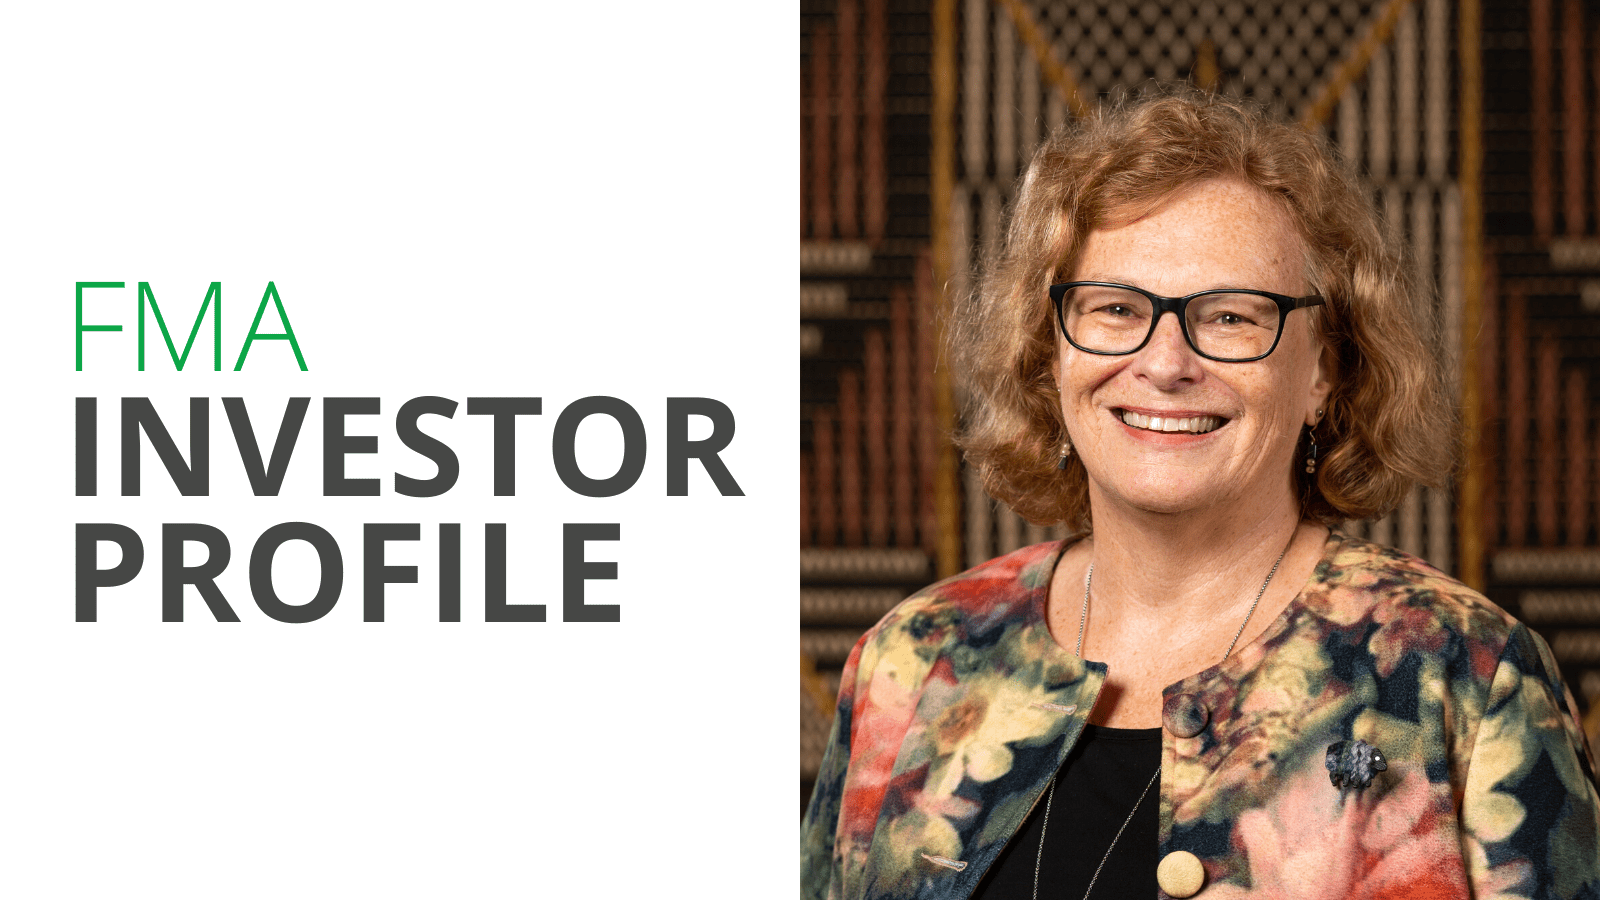 FMA profiles investor, Jane Wrightson.